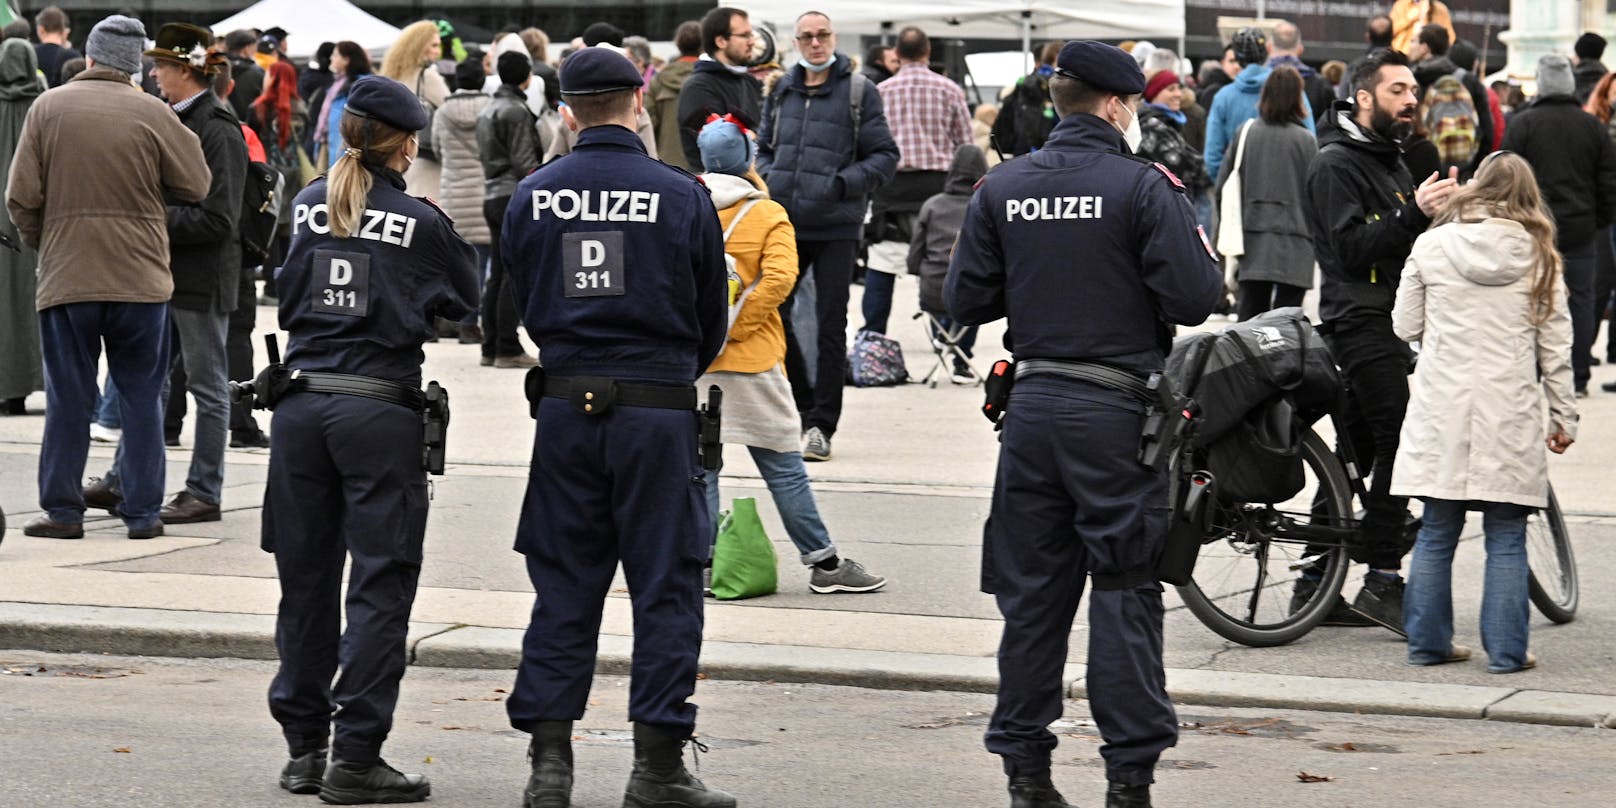 Die geplante Demo in Wien wurde untersagt.